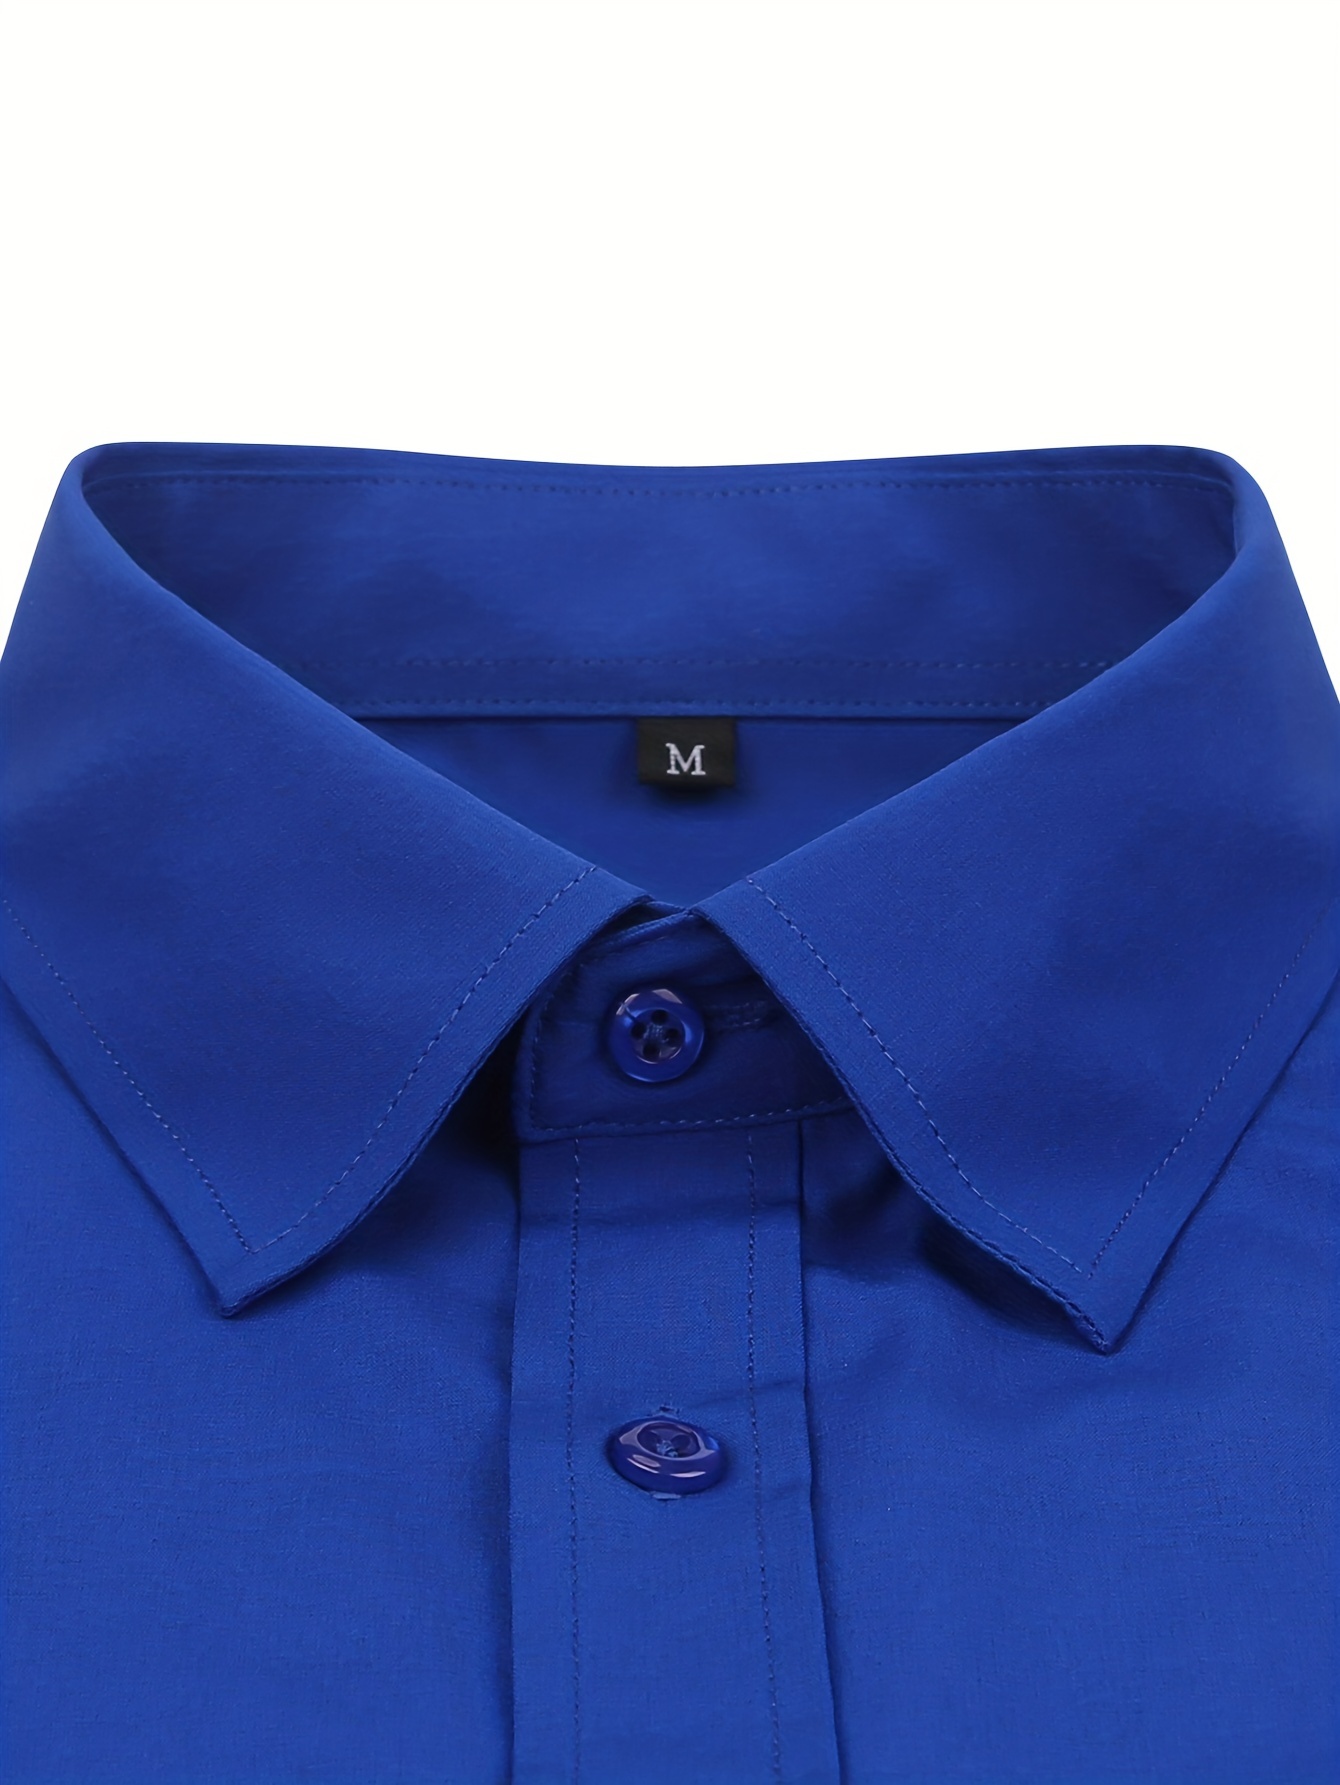 Men's Slim Fit Solid Color Dress Shirt (Royal Blue)